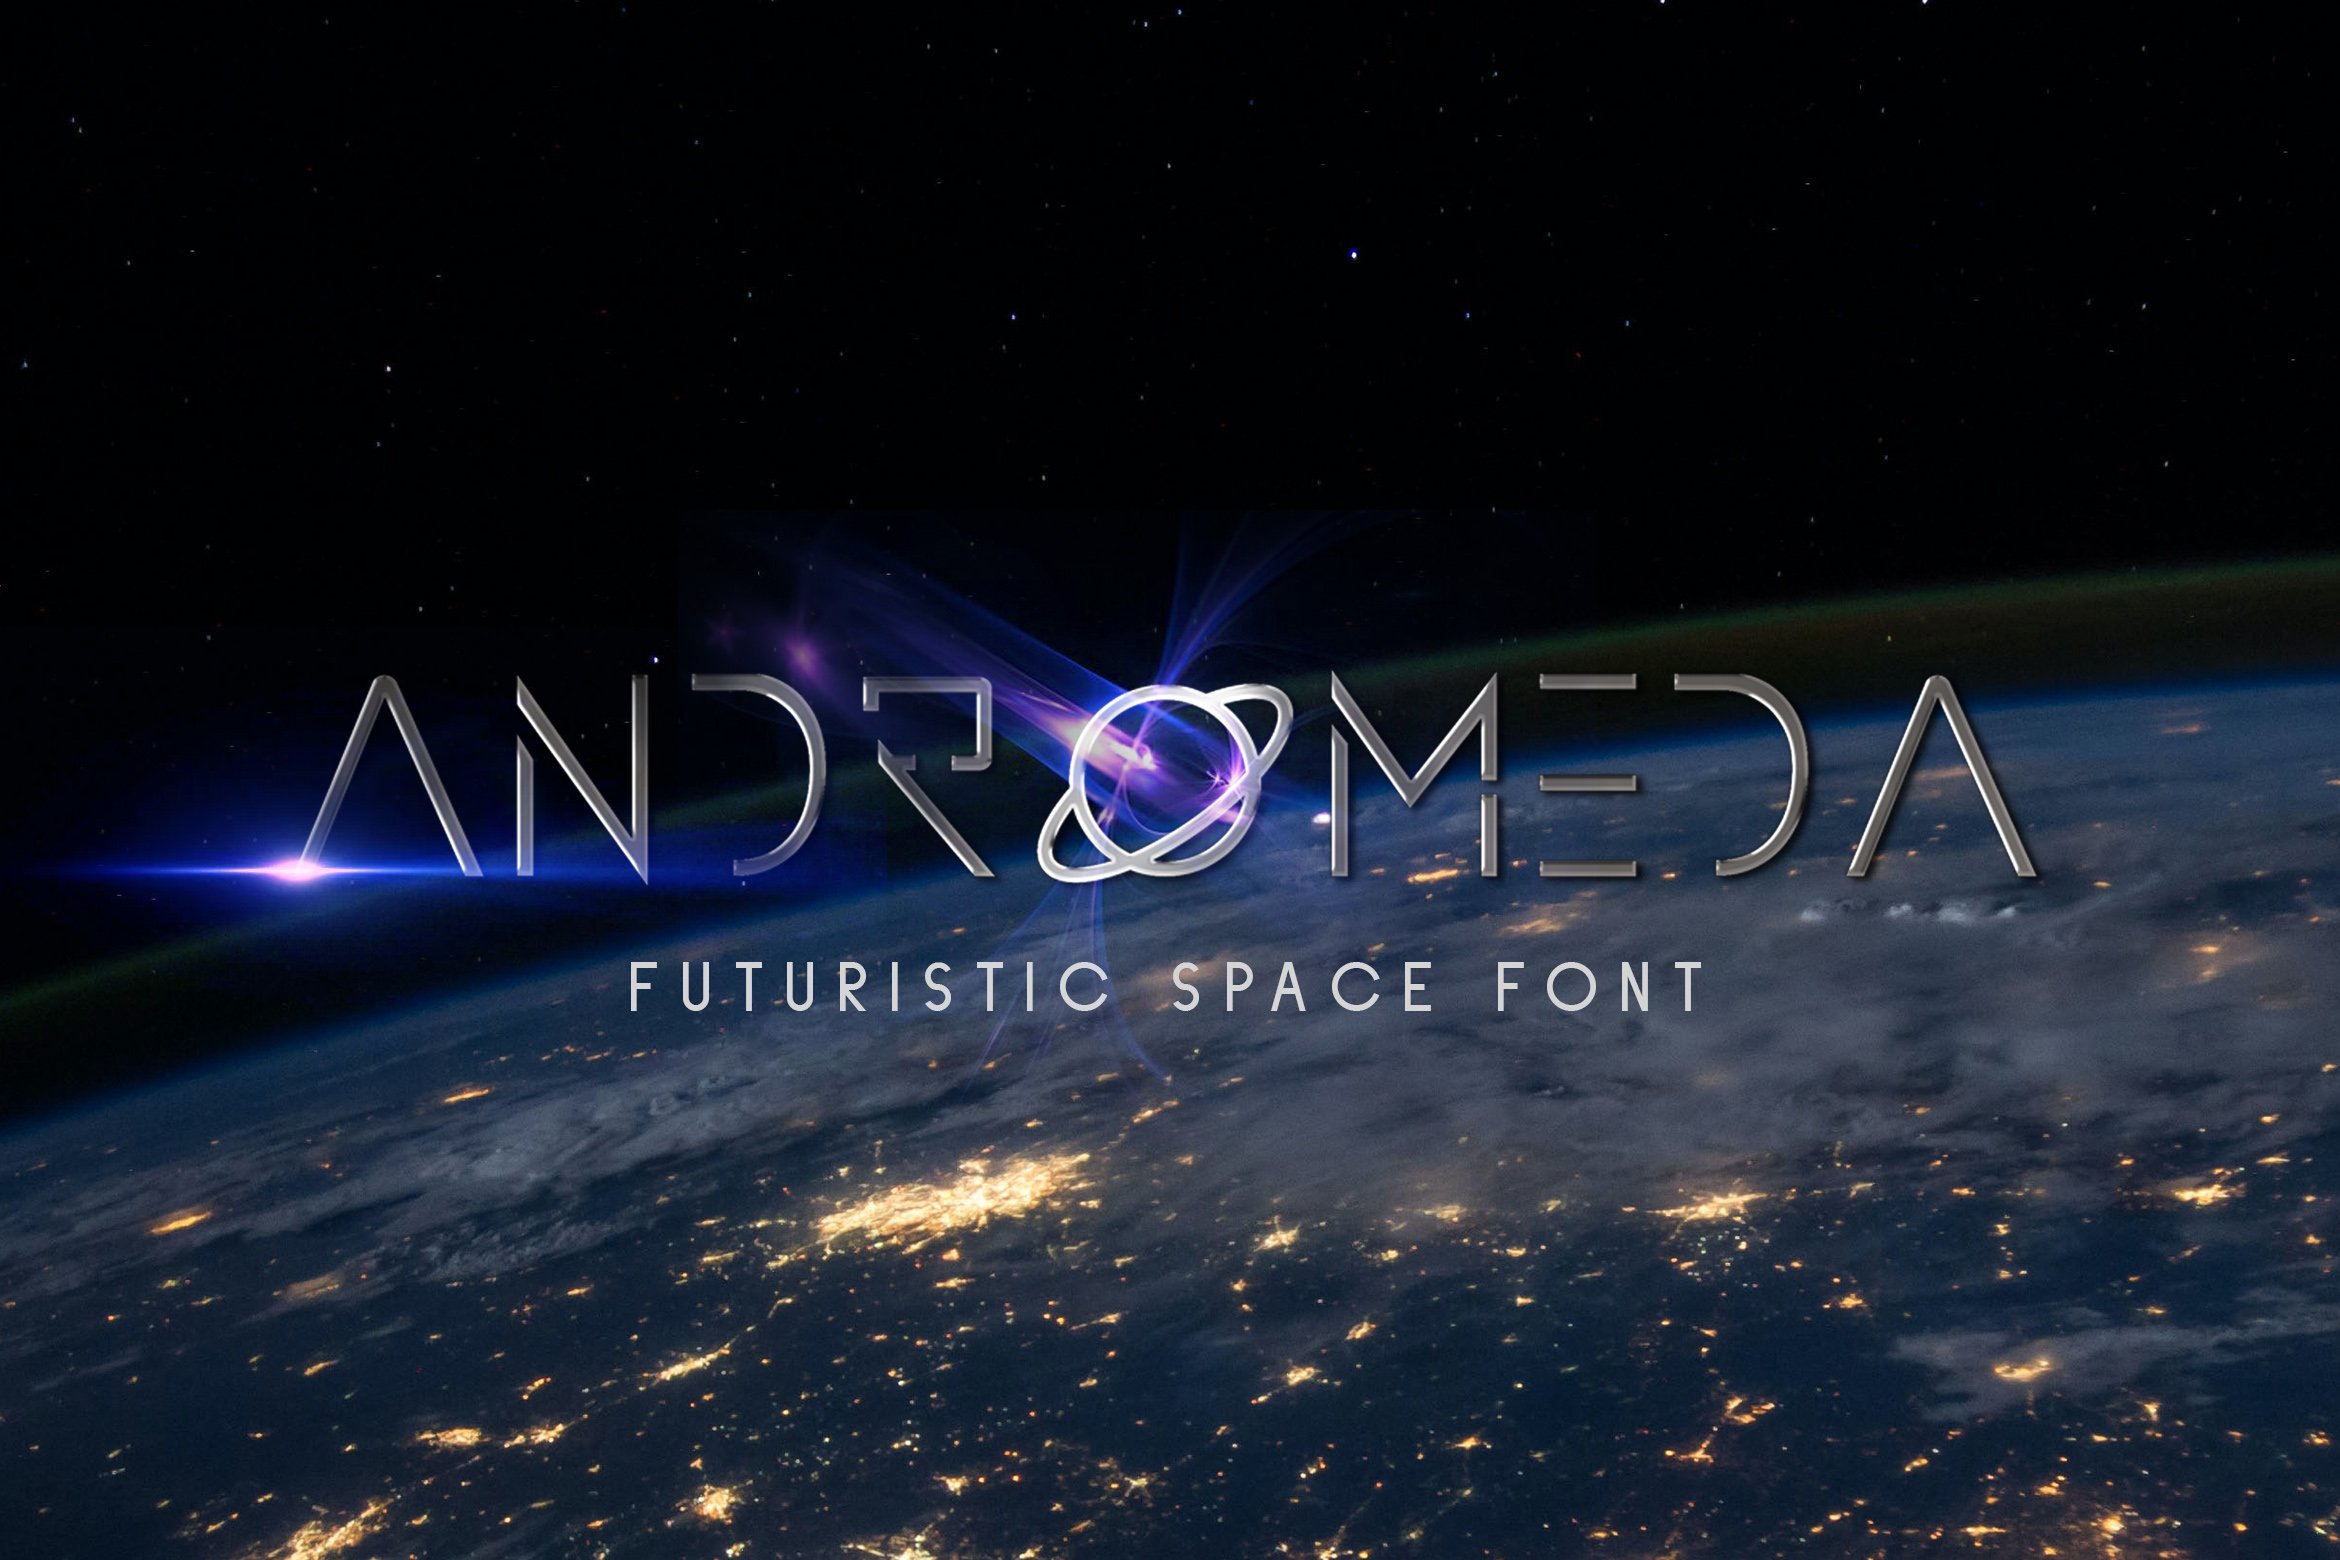 Andromeda - Space Futuristic Font cover image.